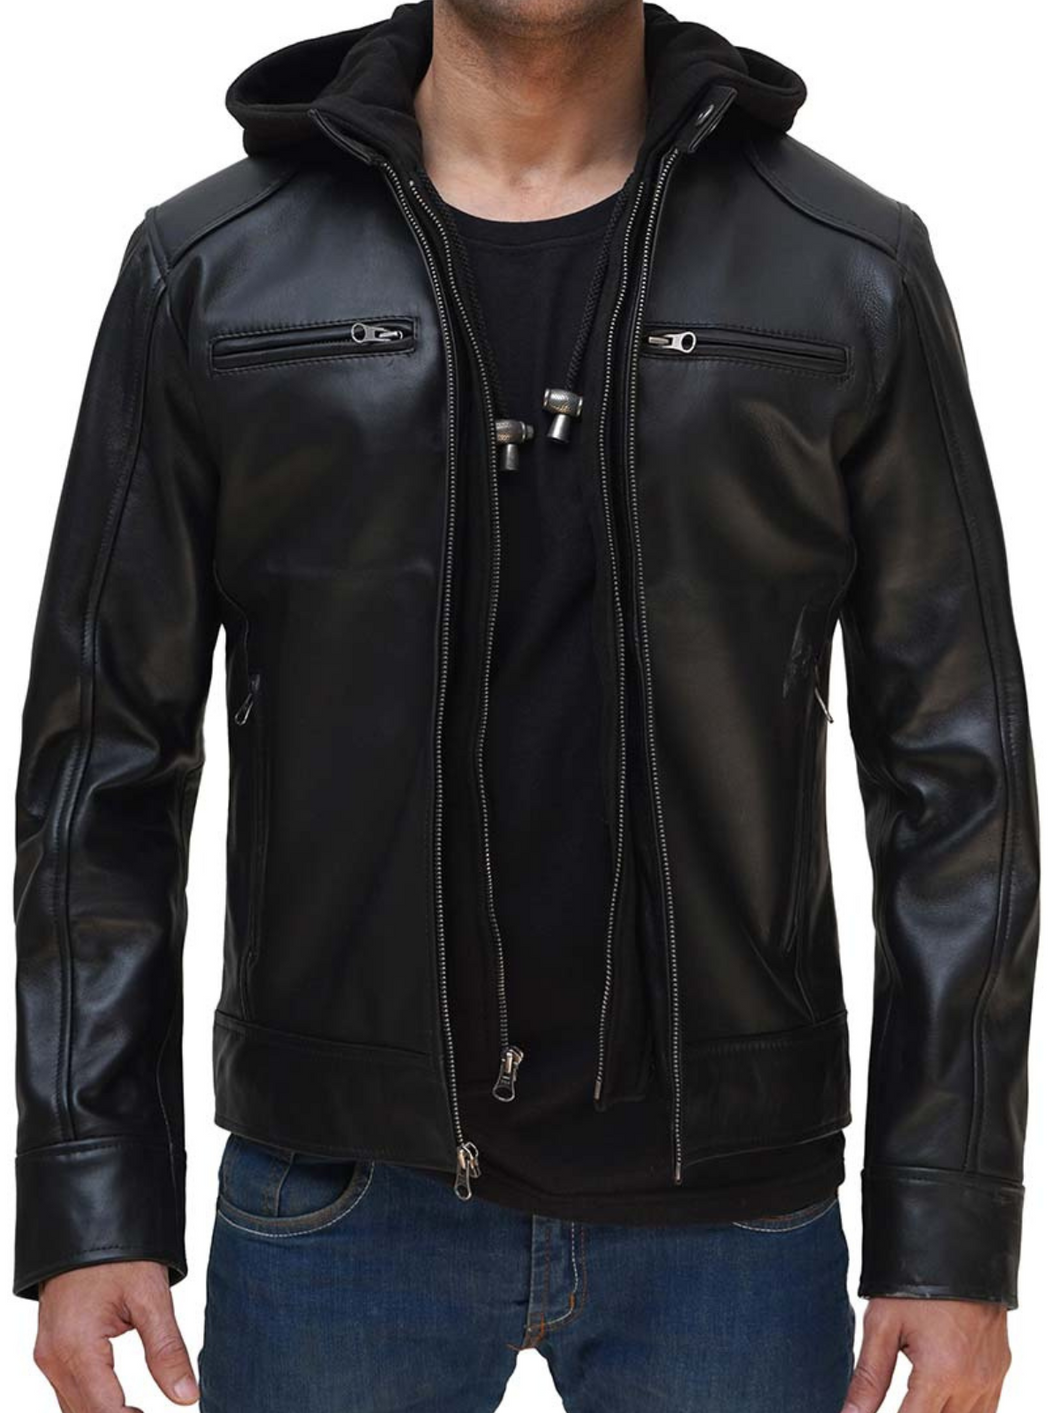 Dodge Mens Black Leather Jacket with Removable Hood